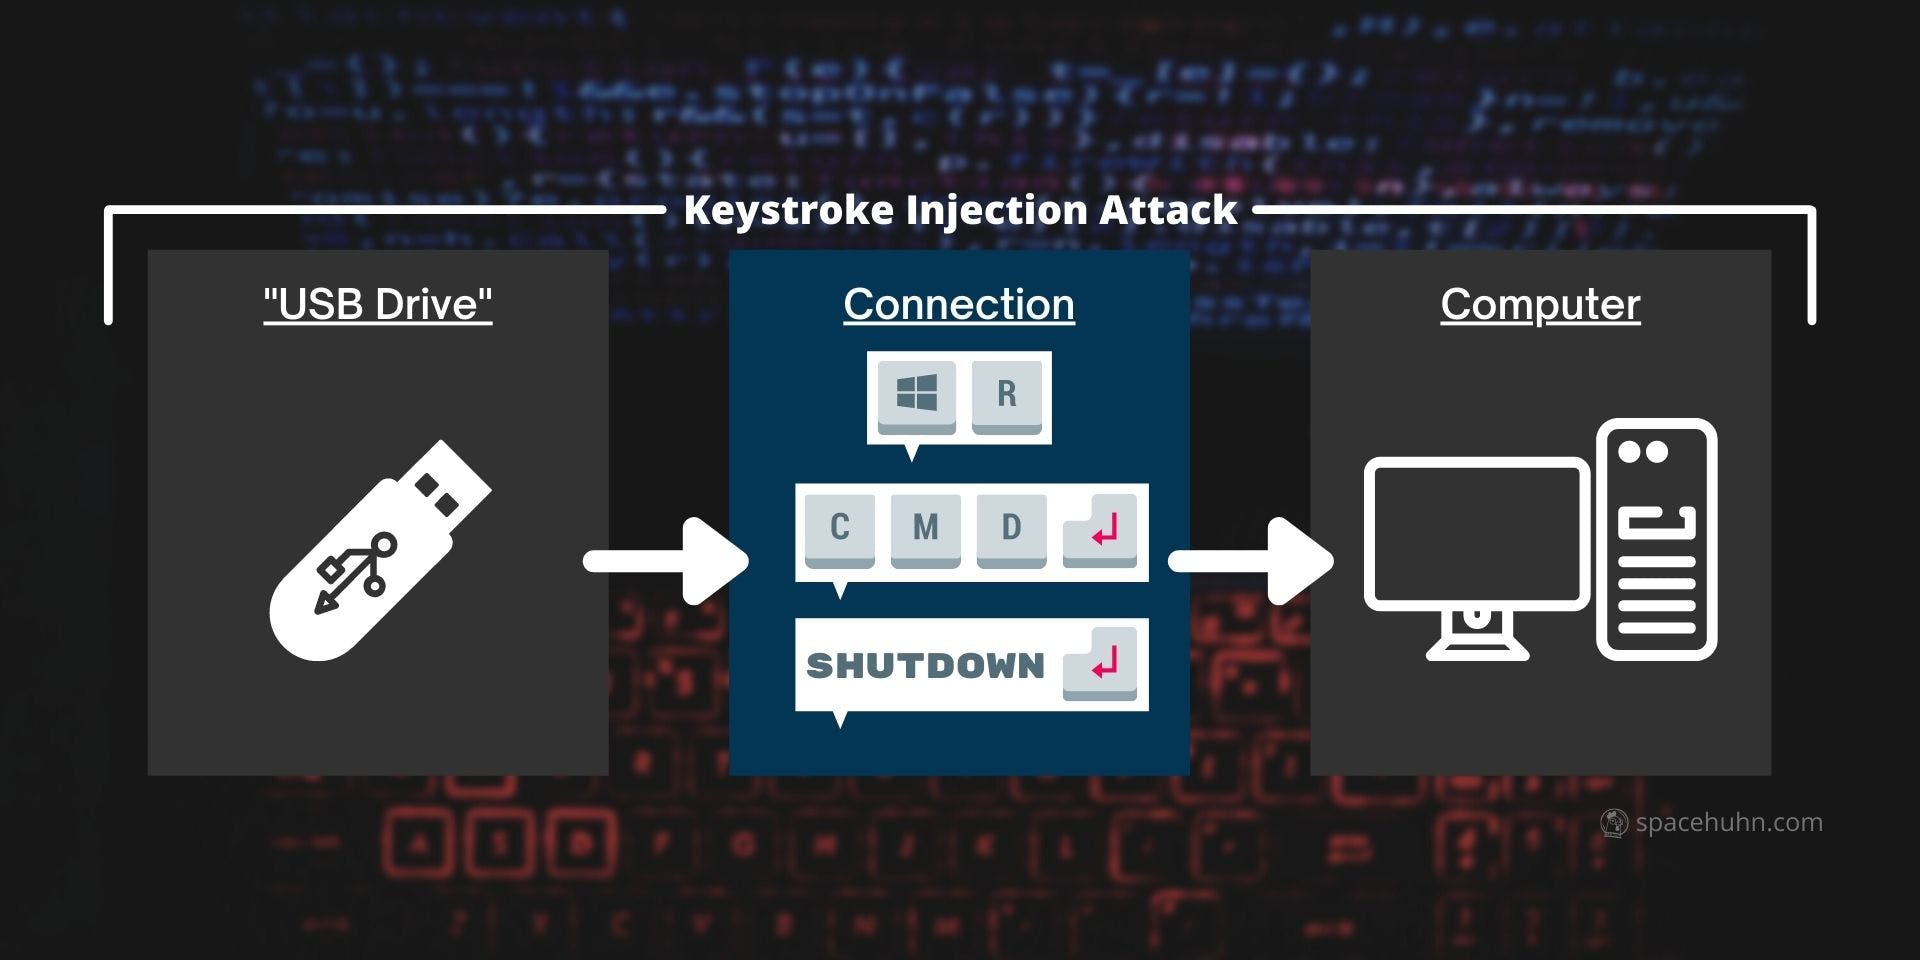 Keystoke Injection Attack visualized